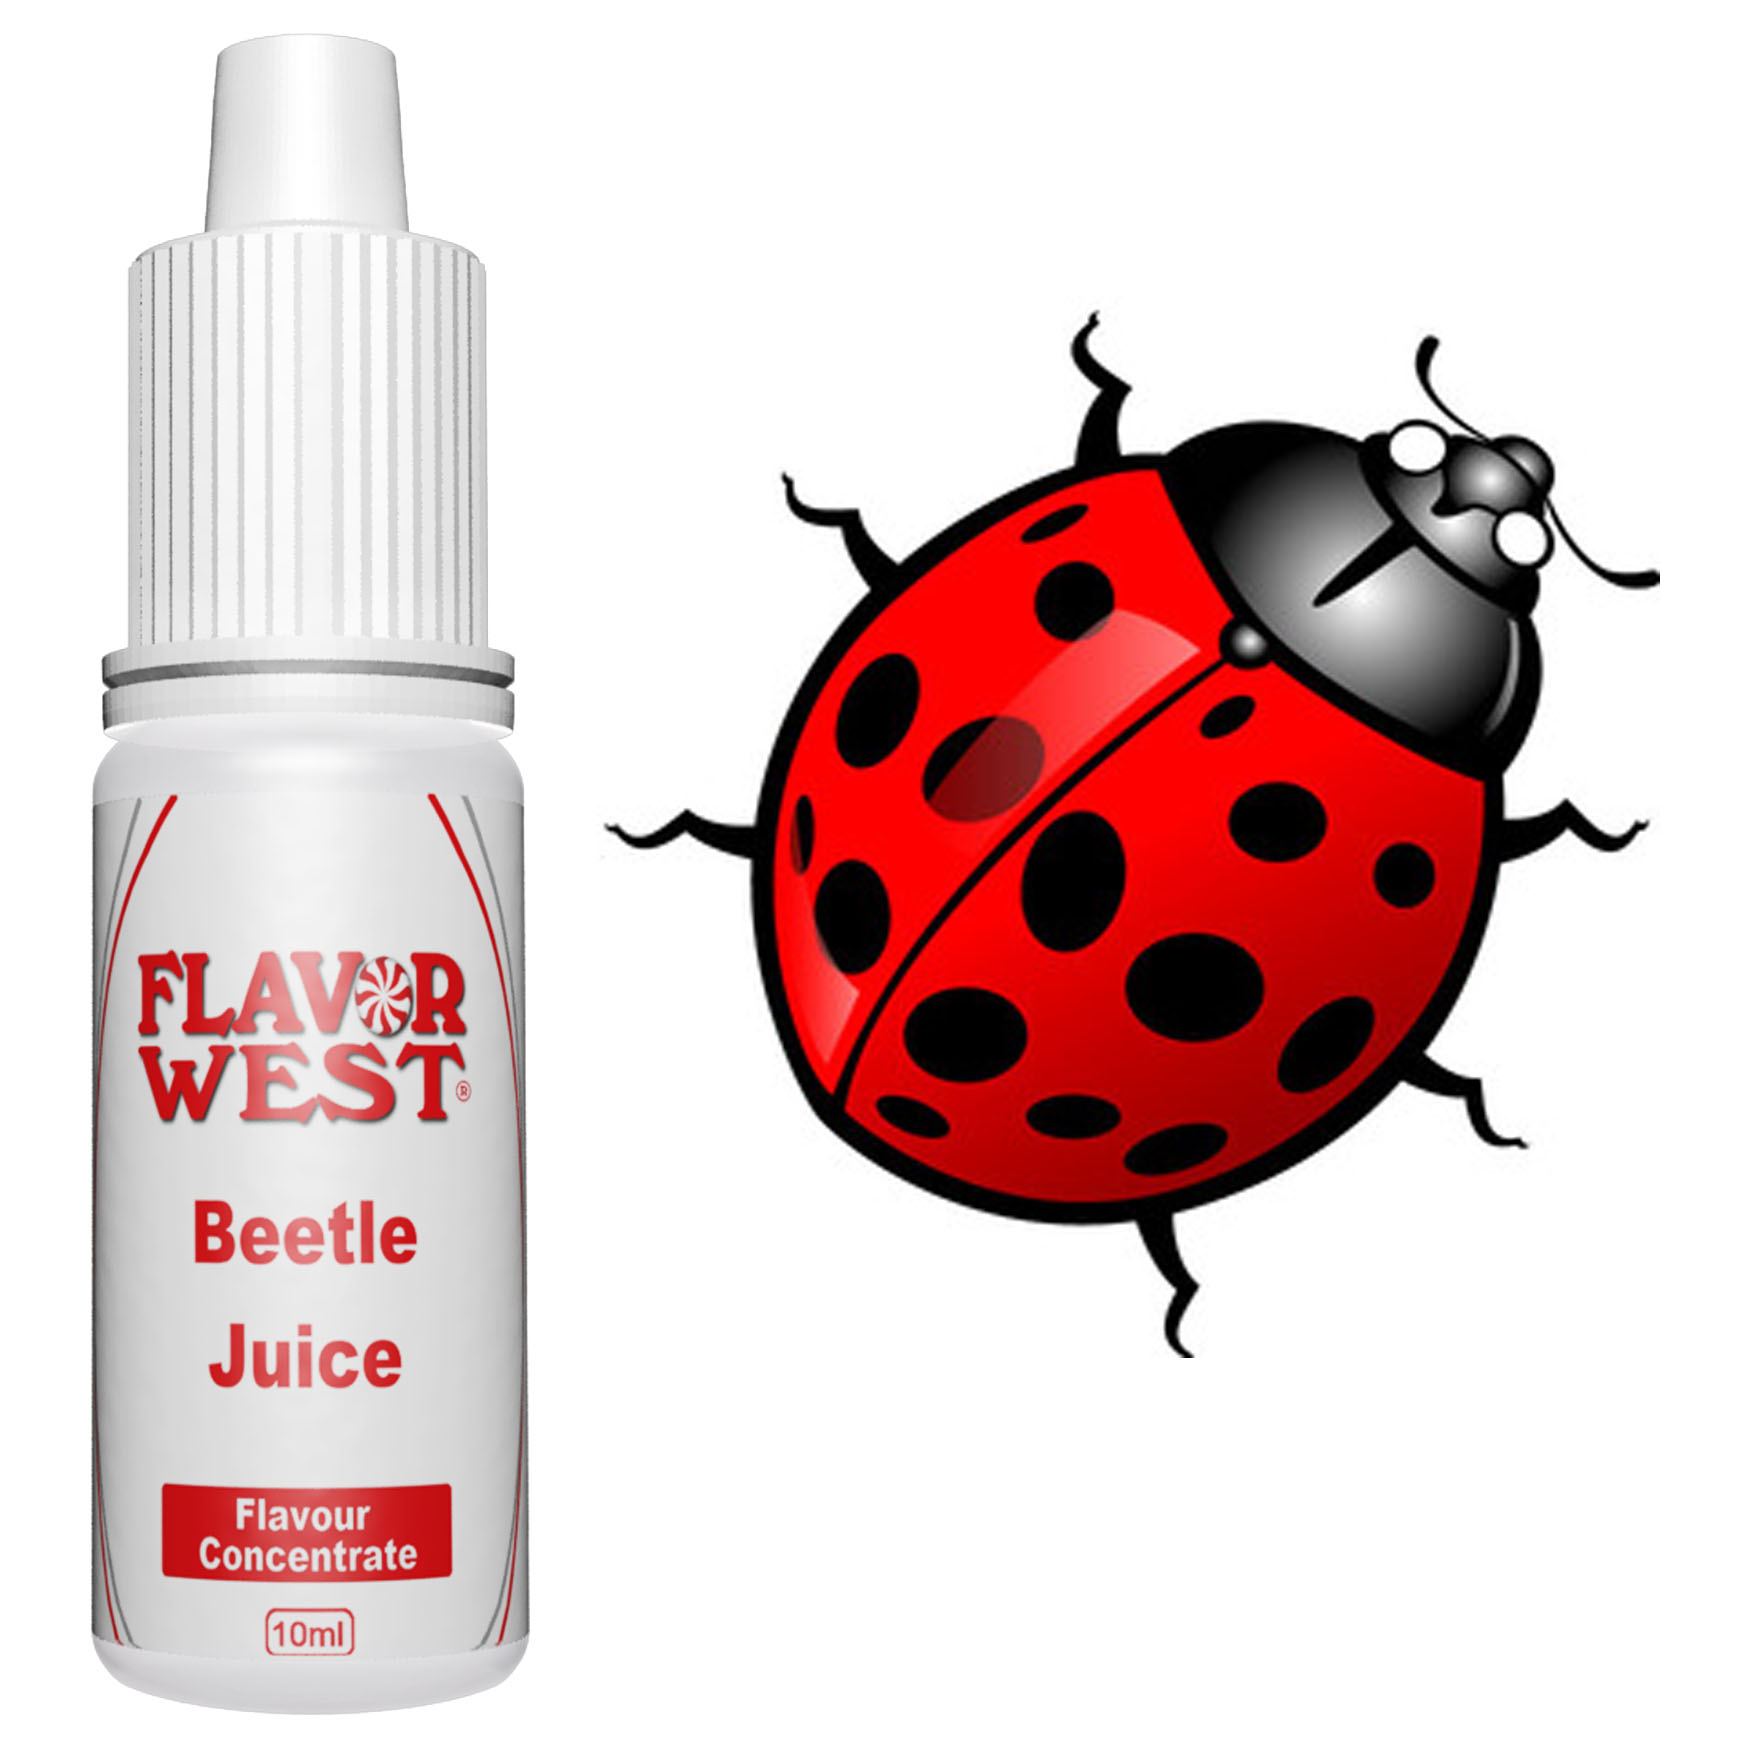 Fashion nova beetle juice